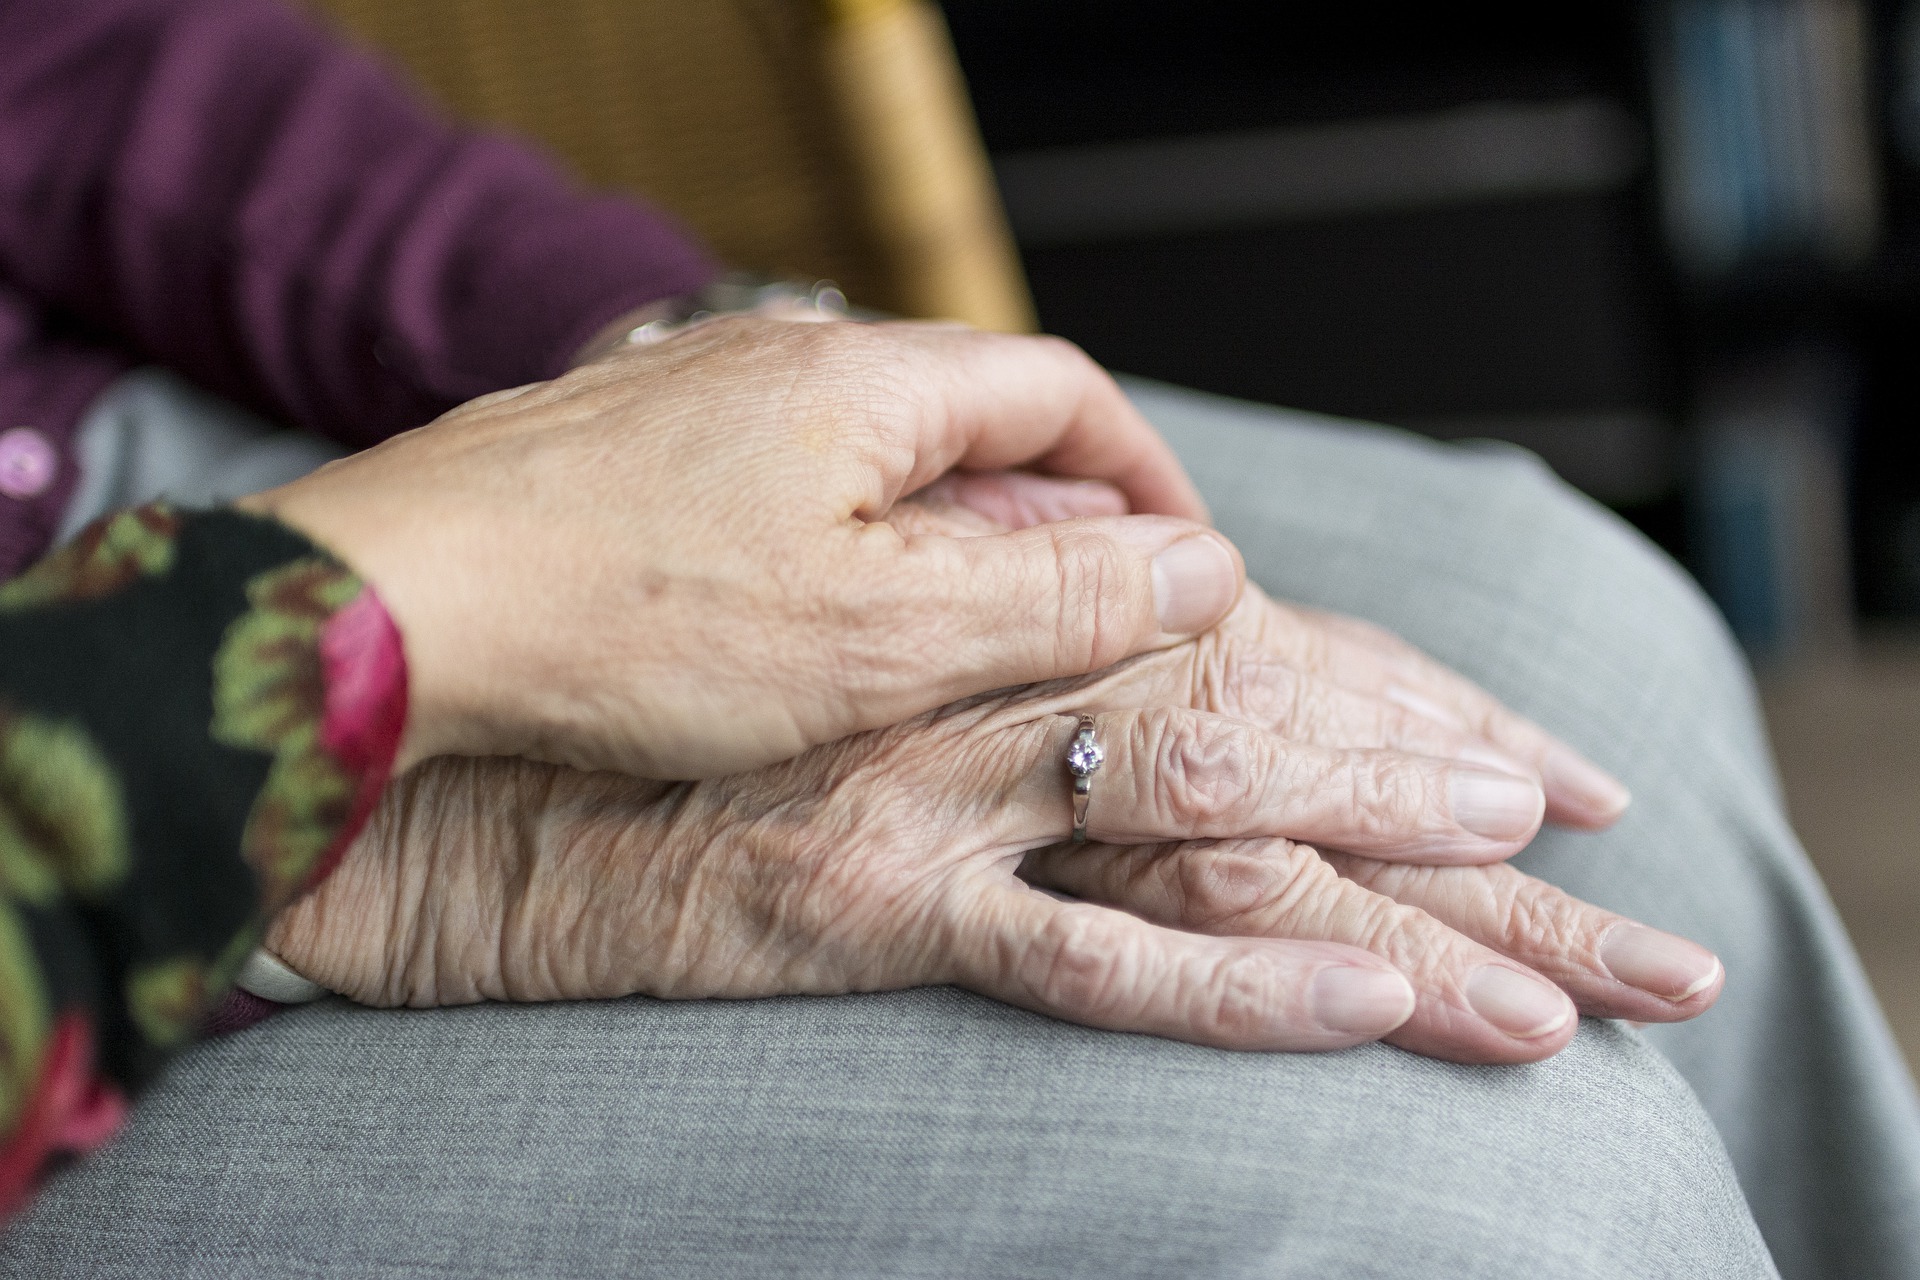 caretaker holding elderly woman's hand 